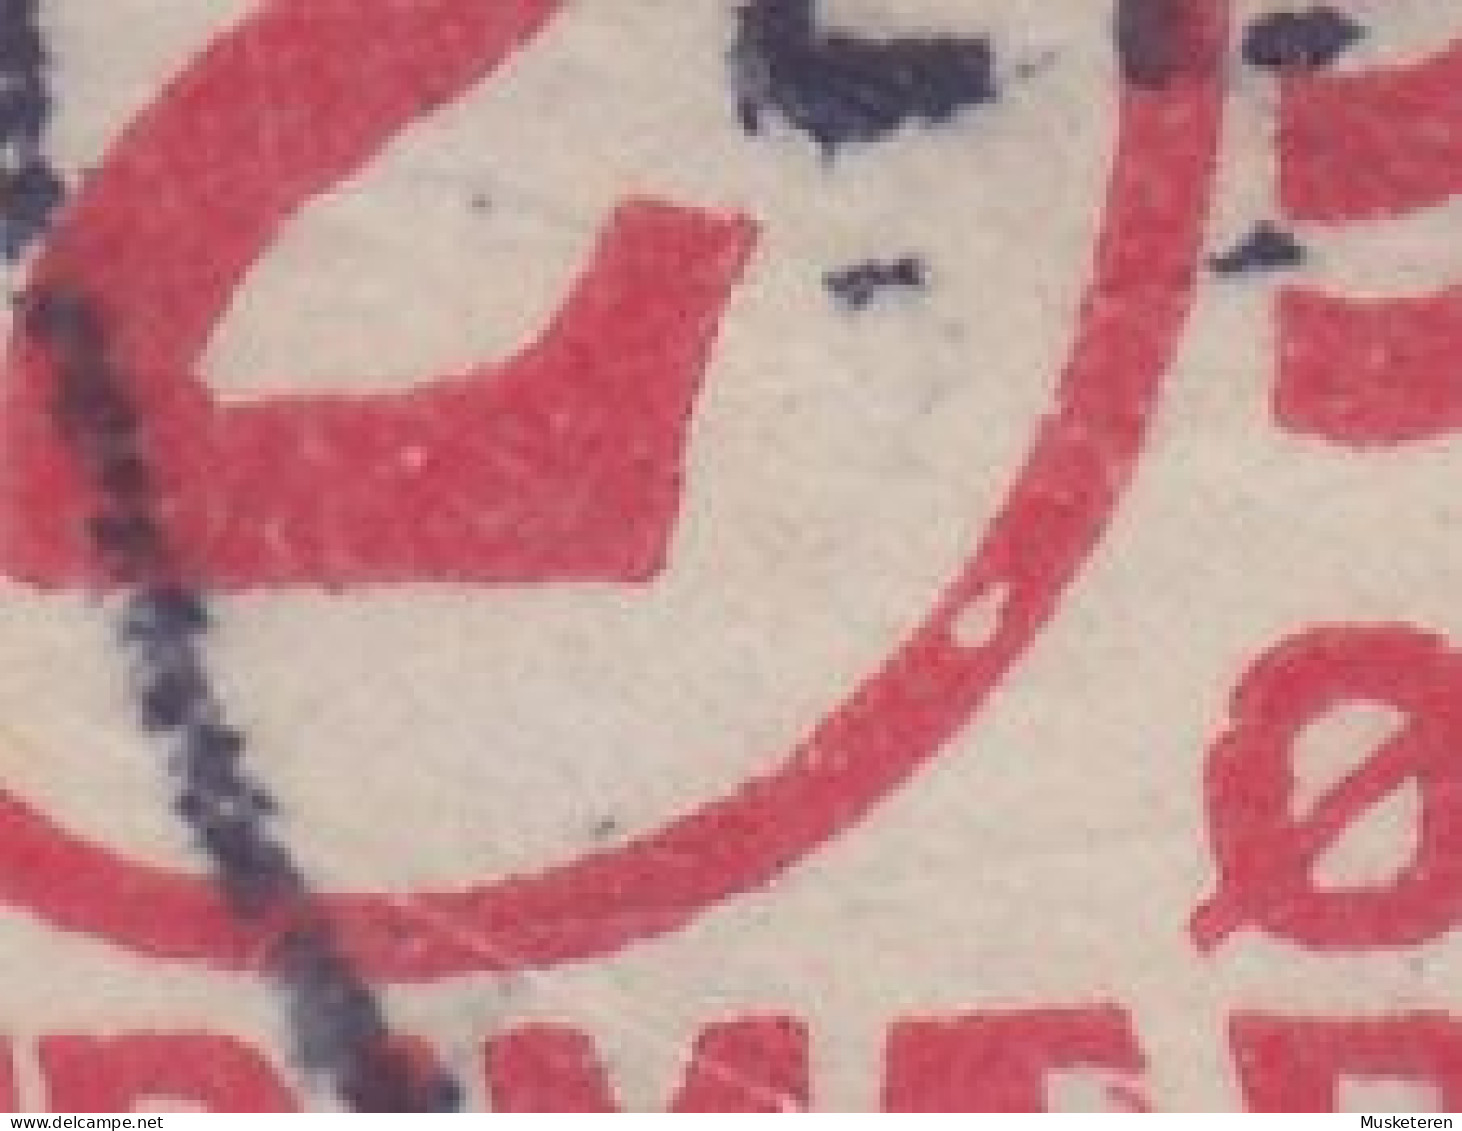 Denmark 1913 Mi. 78, 2 Øre Wellenlinien ERROR Variety (Left Stamp) White Spot In Red Oval Frame (2 Scans) - Errors, Freaks & Oddities (EFO)